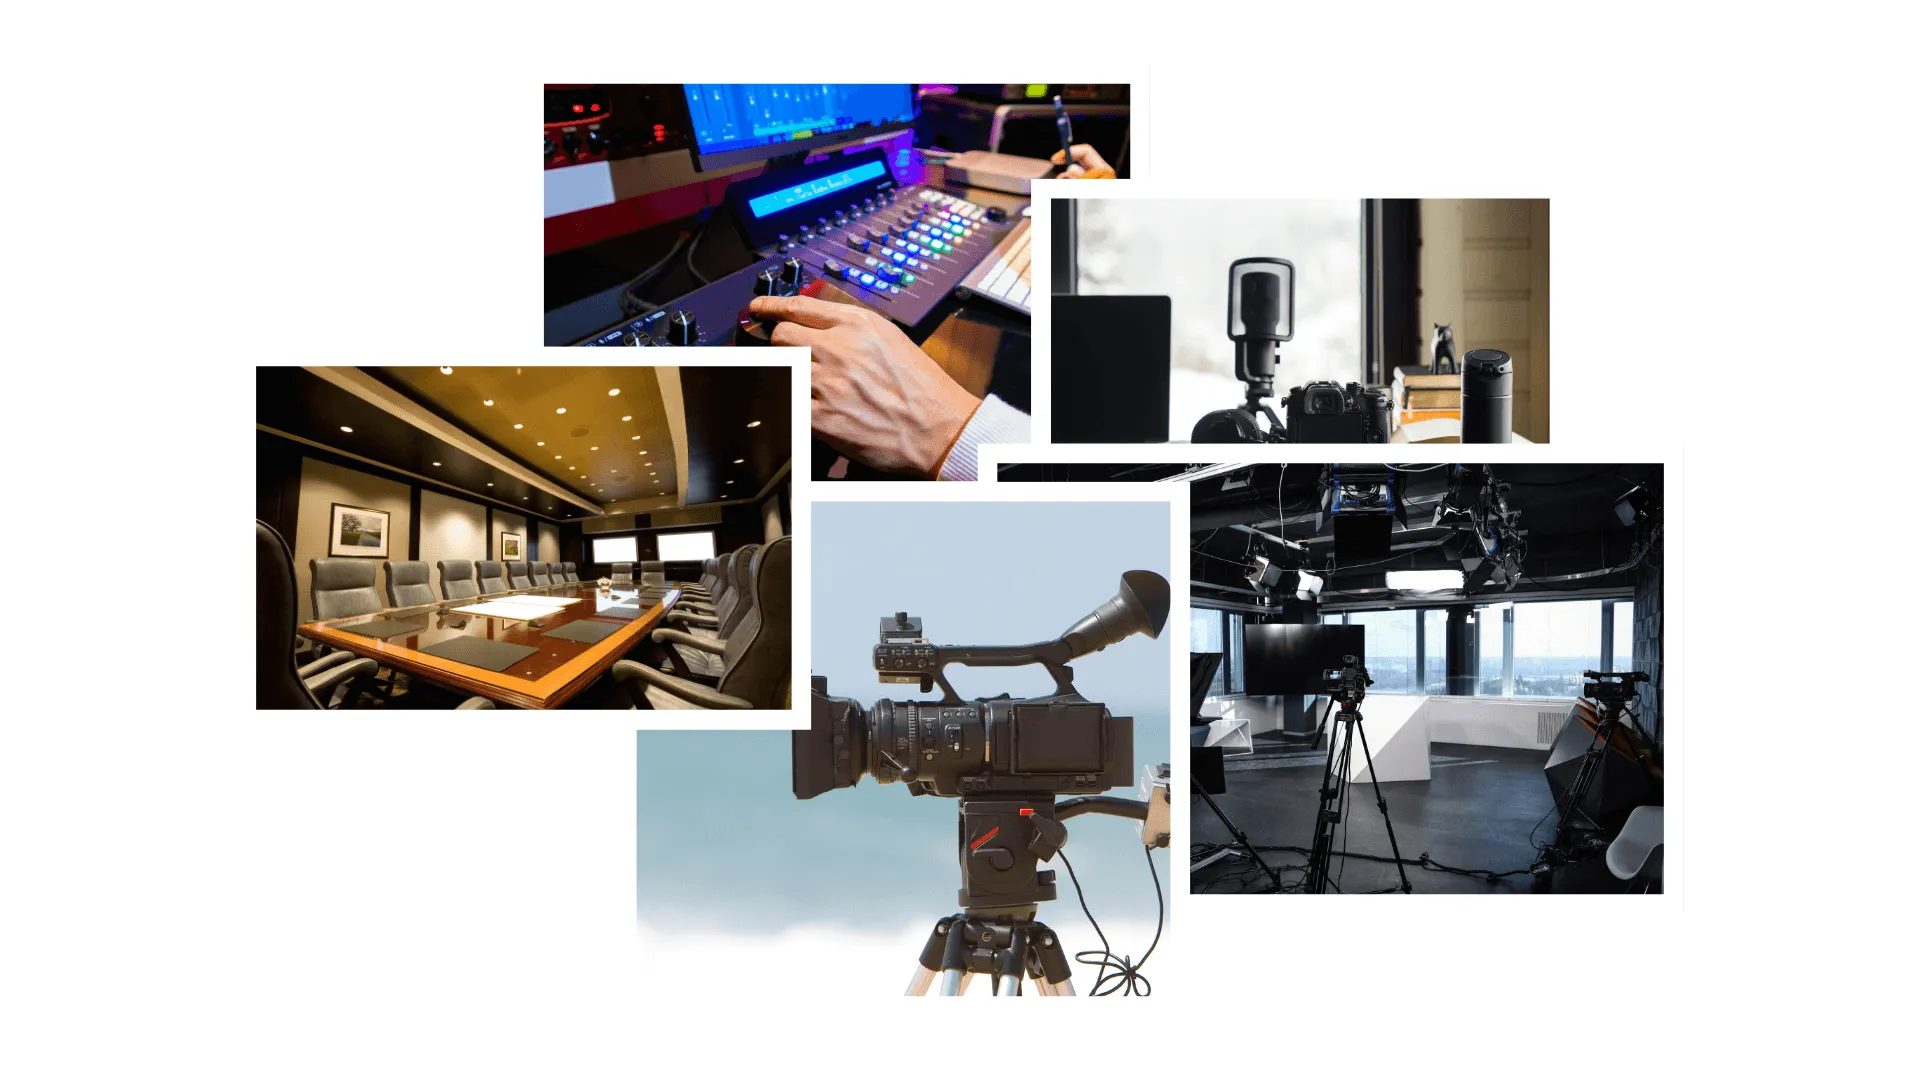 agathos-fides website design audio video companies 5 picture collage